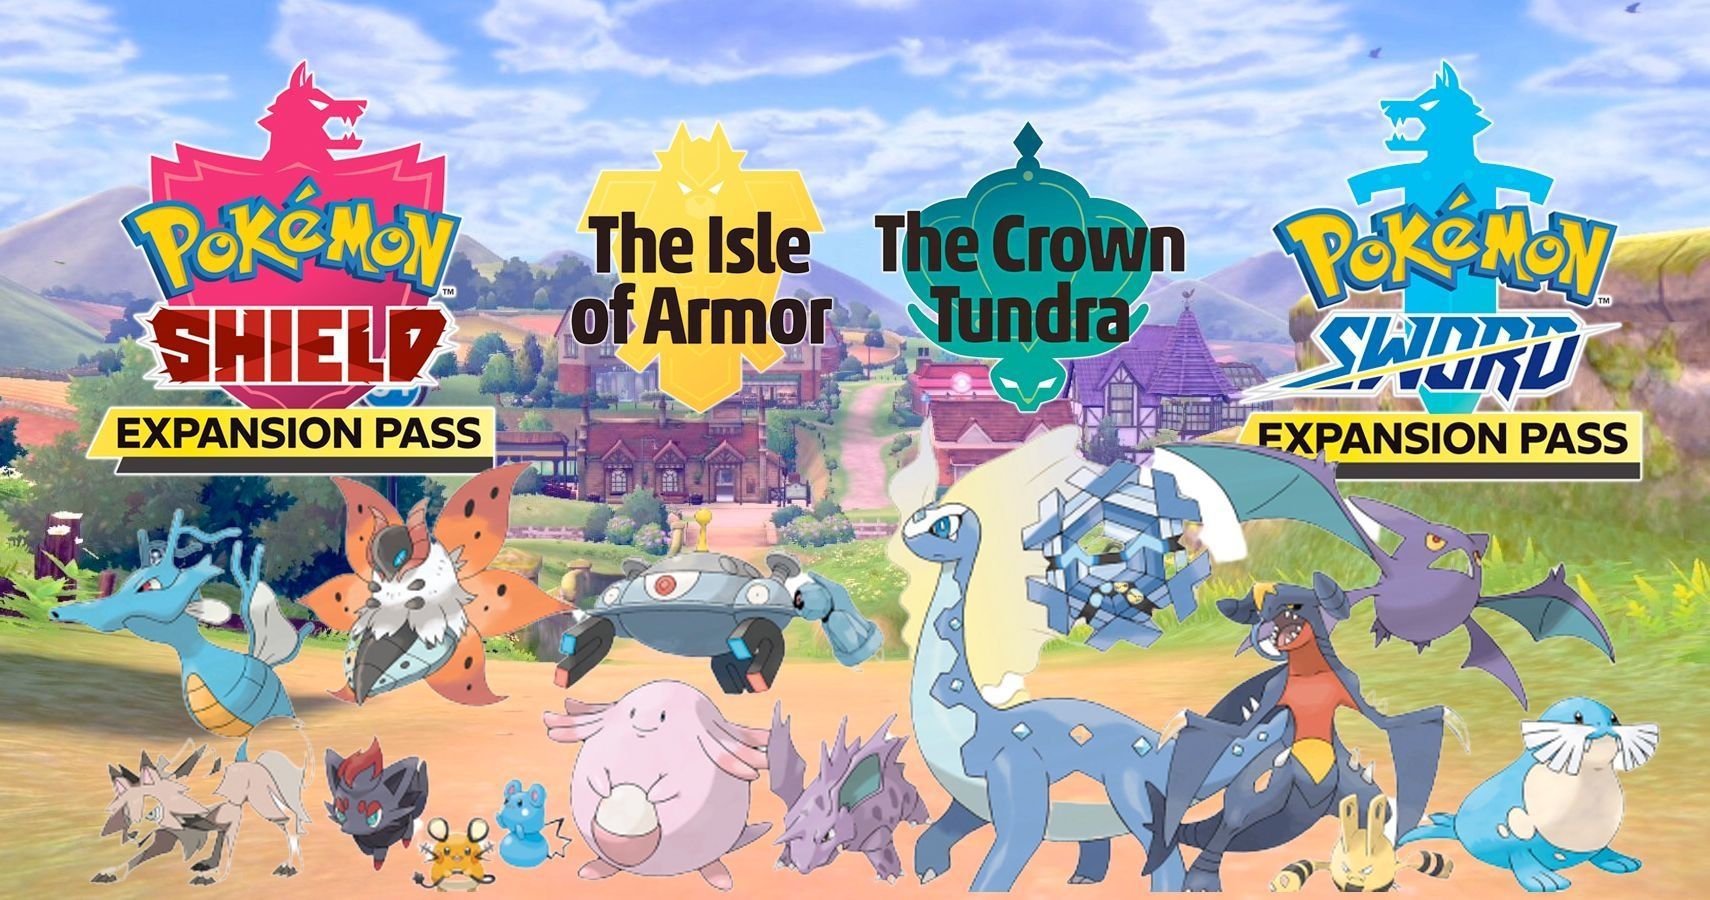 Pokémon Sword & Shield DLC: Everything We Know So Far About Isle